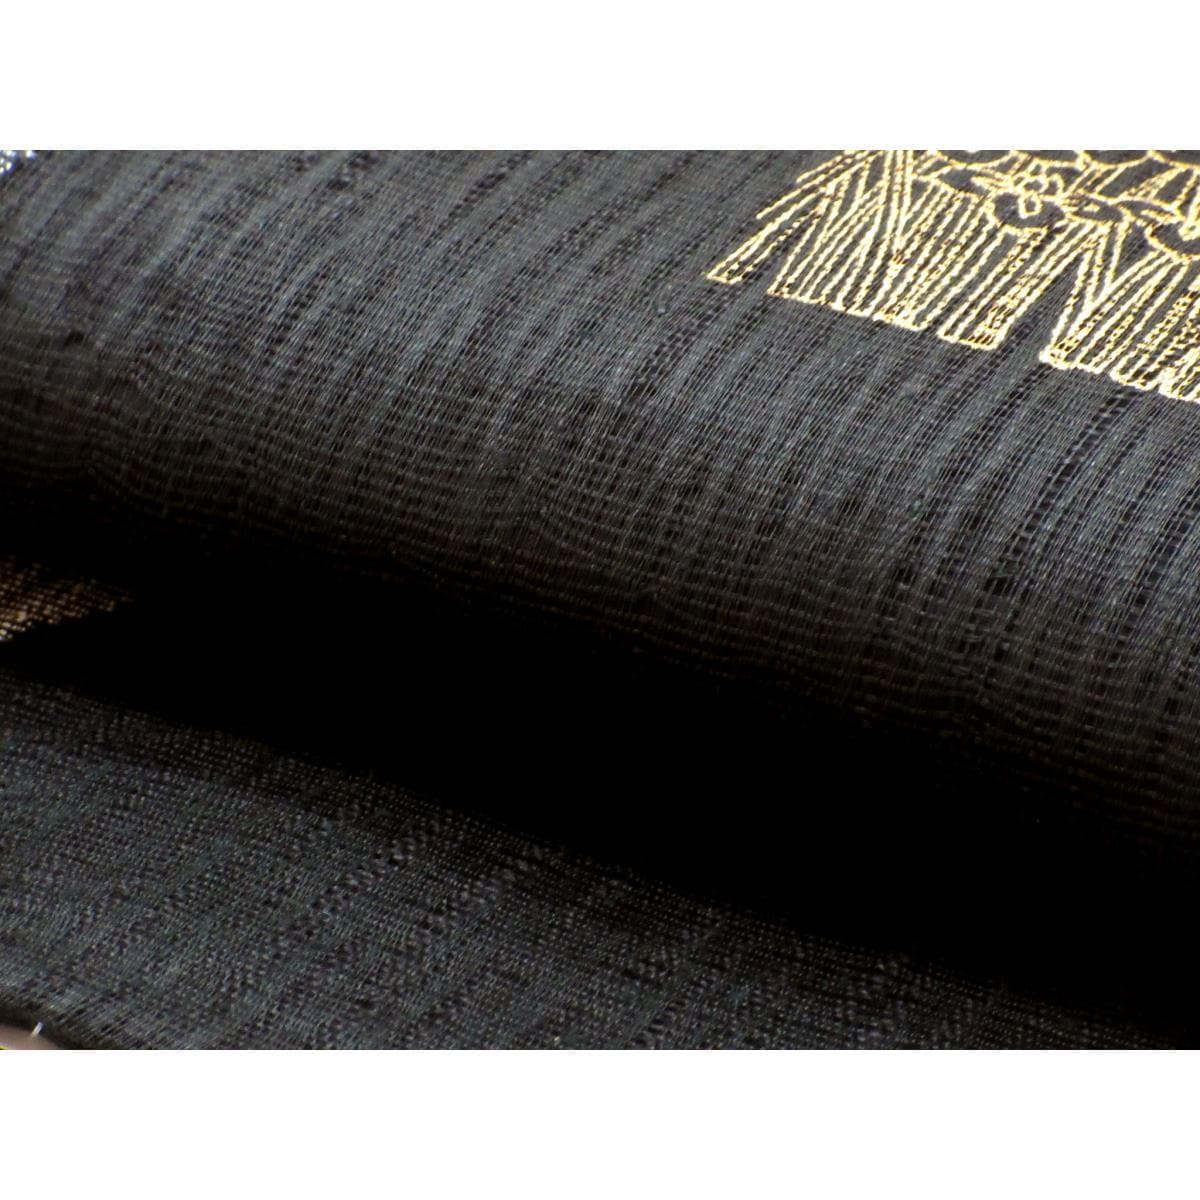 Fukuro-obi (openwork skewered silk sash) with gold leaf finish